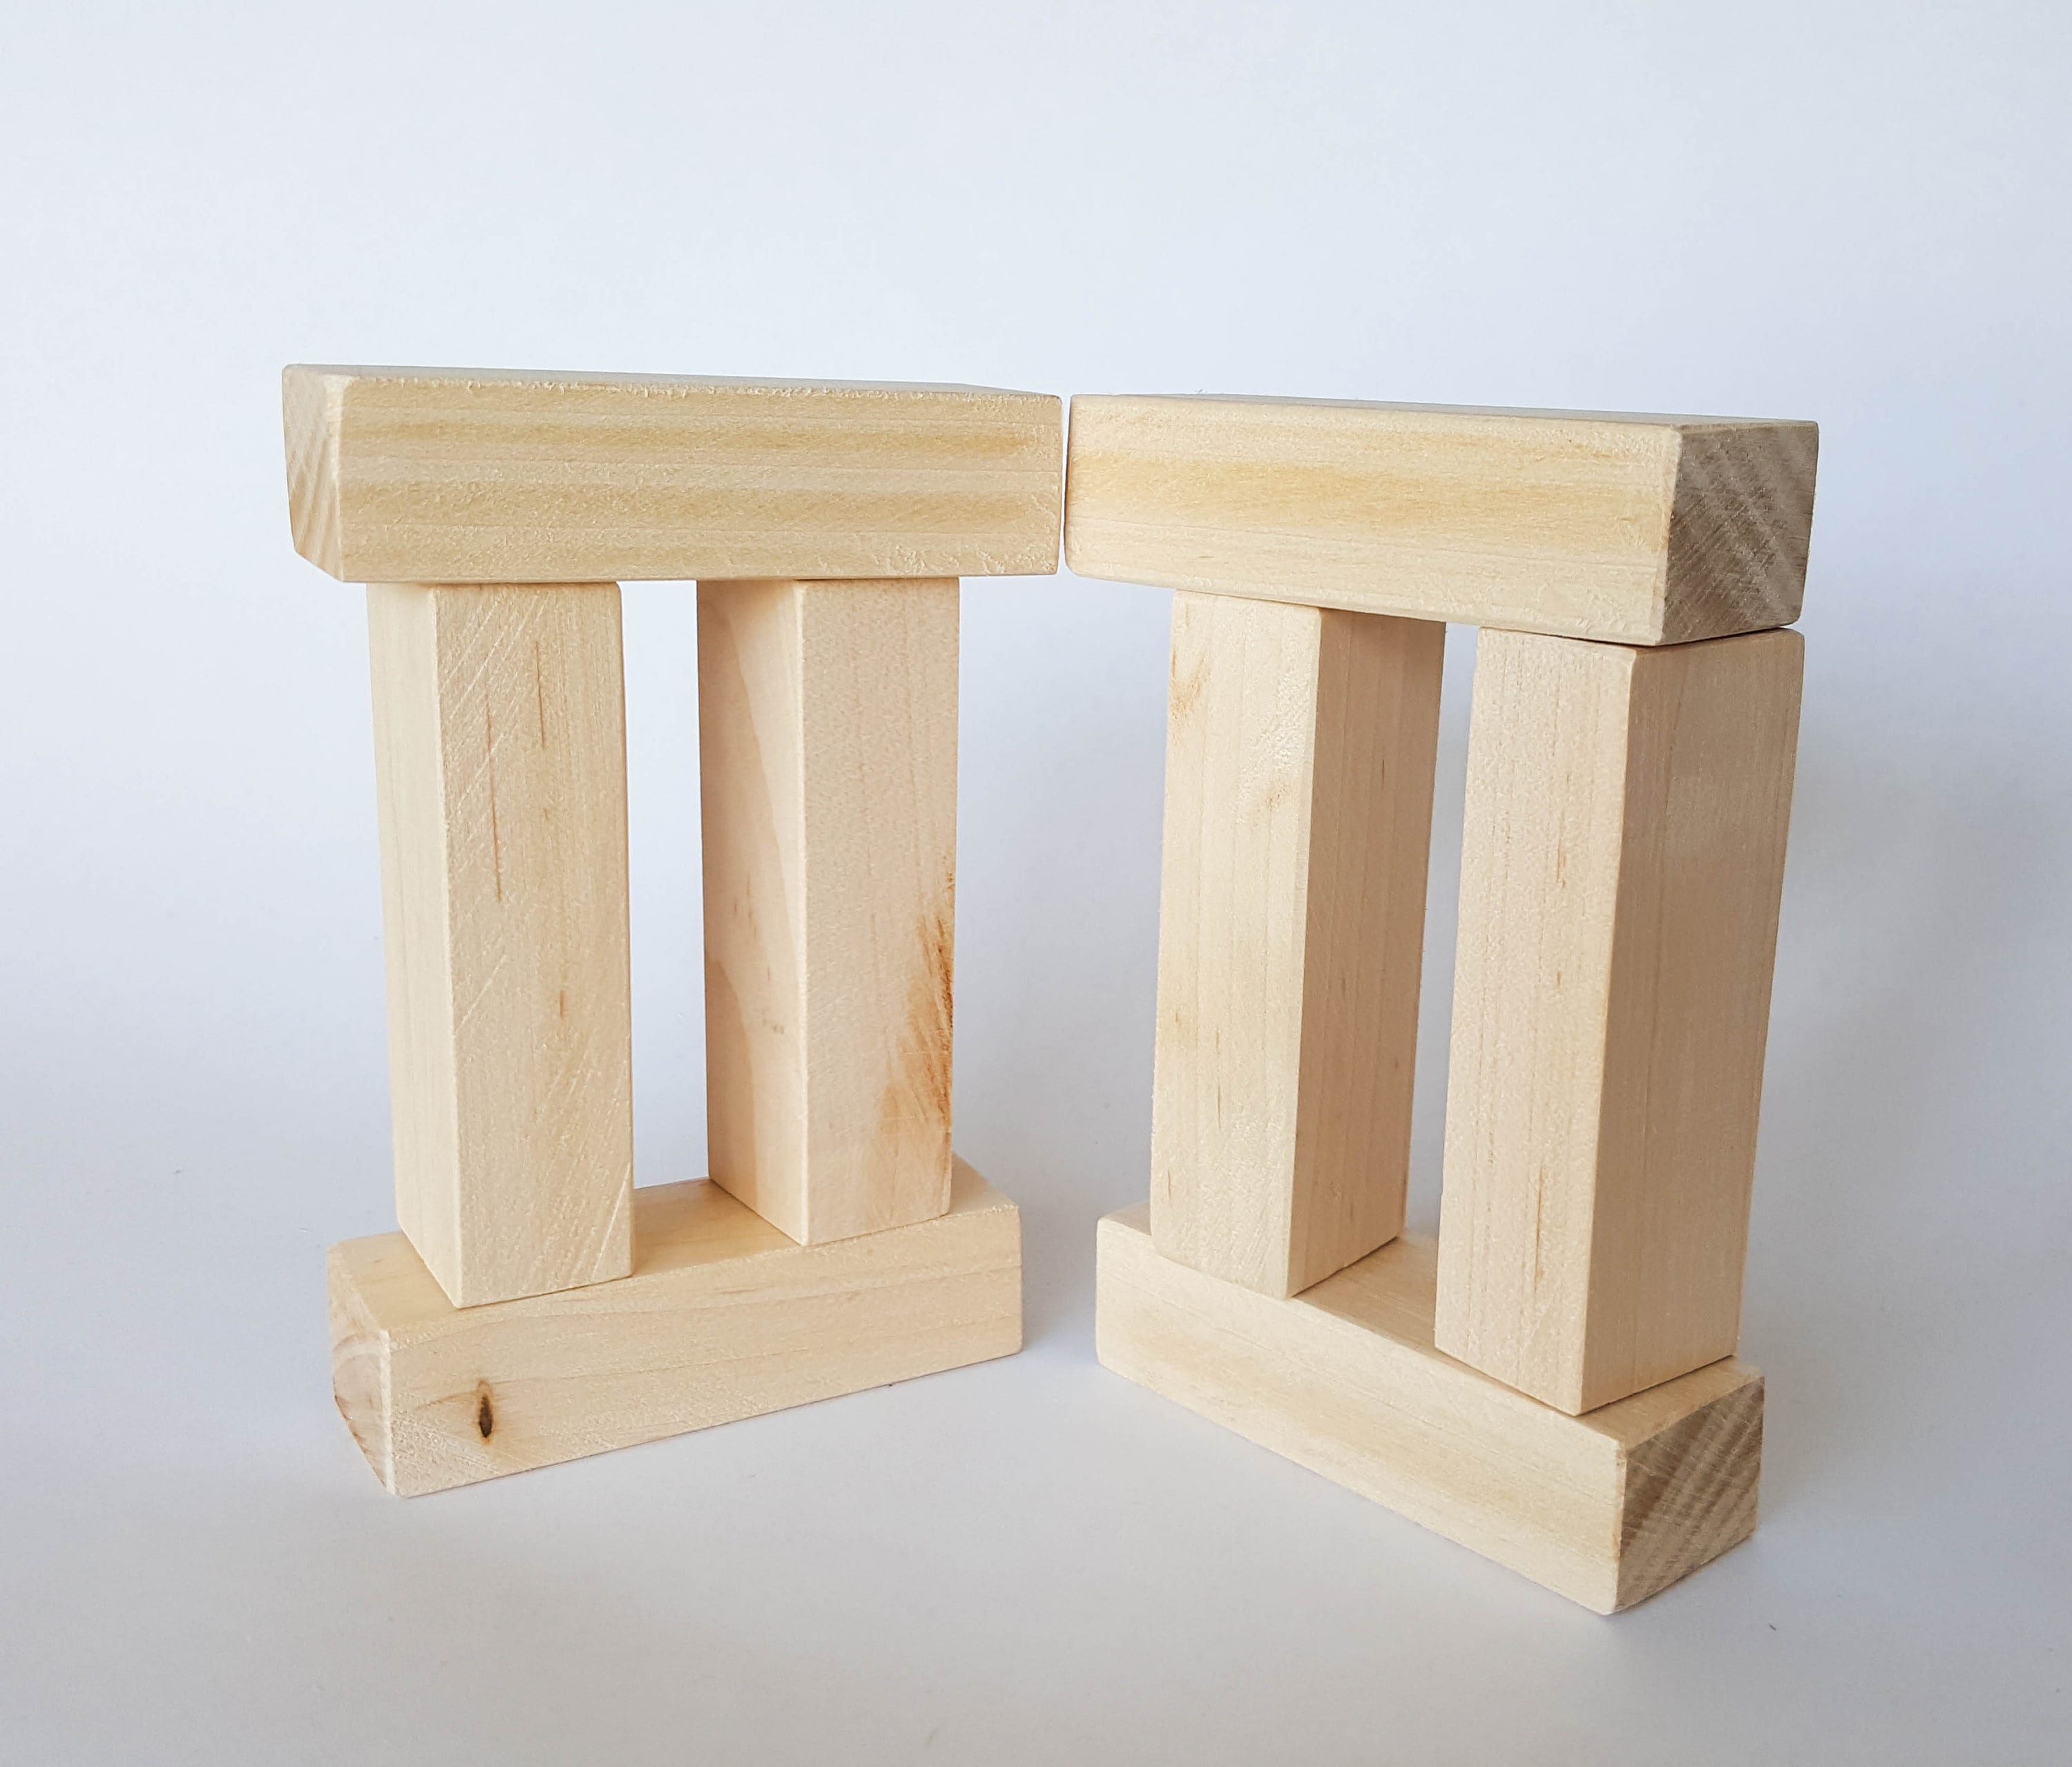 Wooden Construction Blocks Small, Wooden Rectangular Blocks